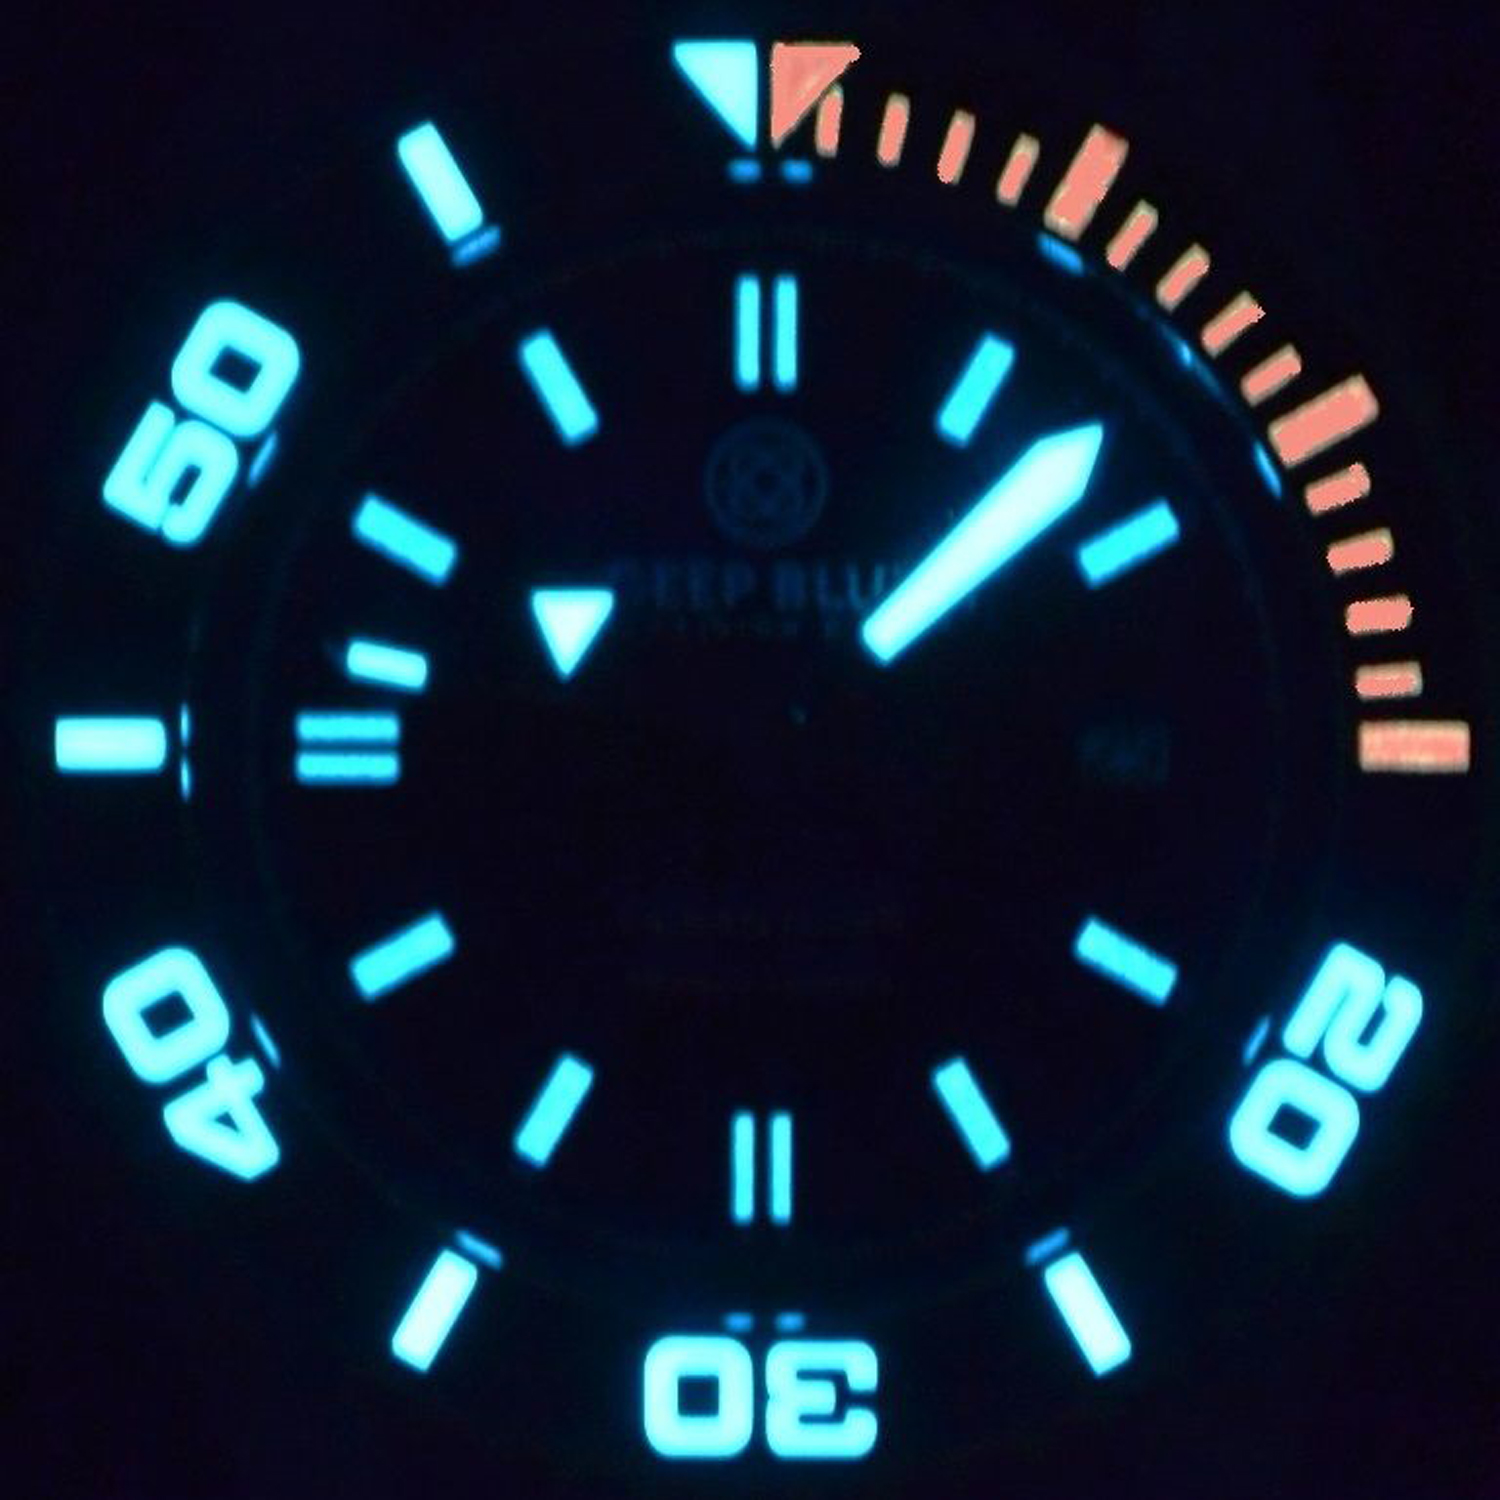 Deep Blue Ocean Diver 500 Automatic Men's Diver Watch Black-Red Bezel / Black-Red Dial - Click Image to Close